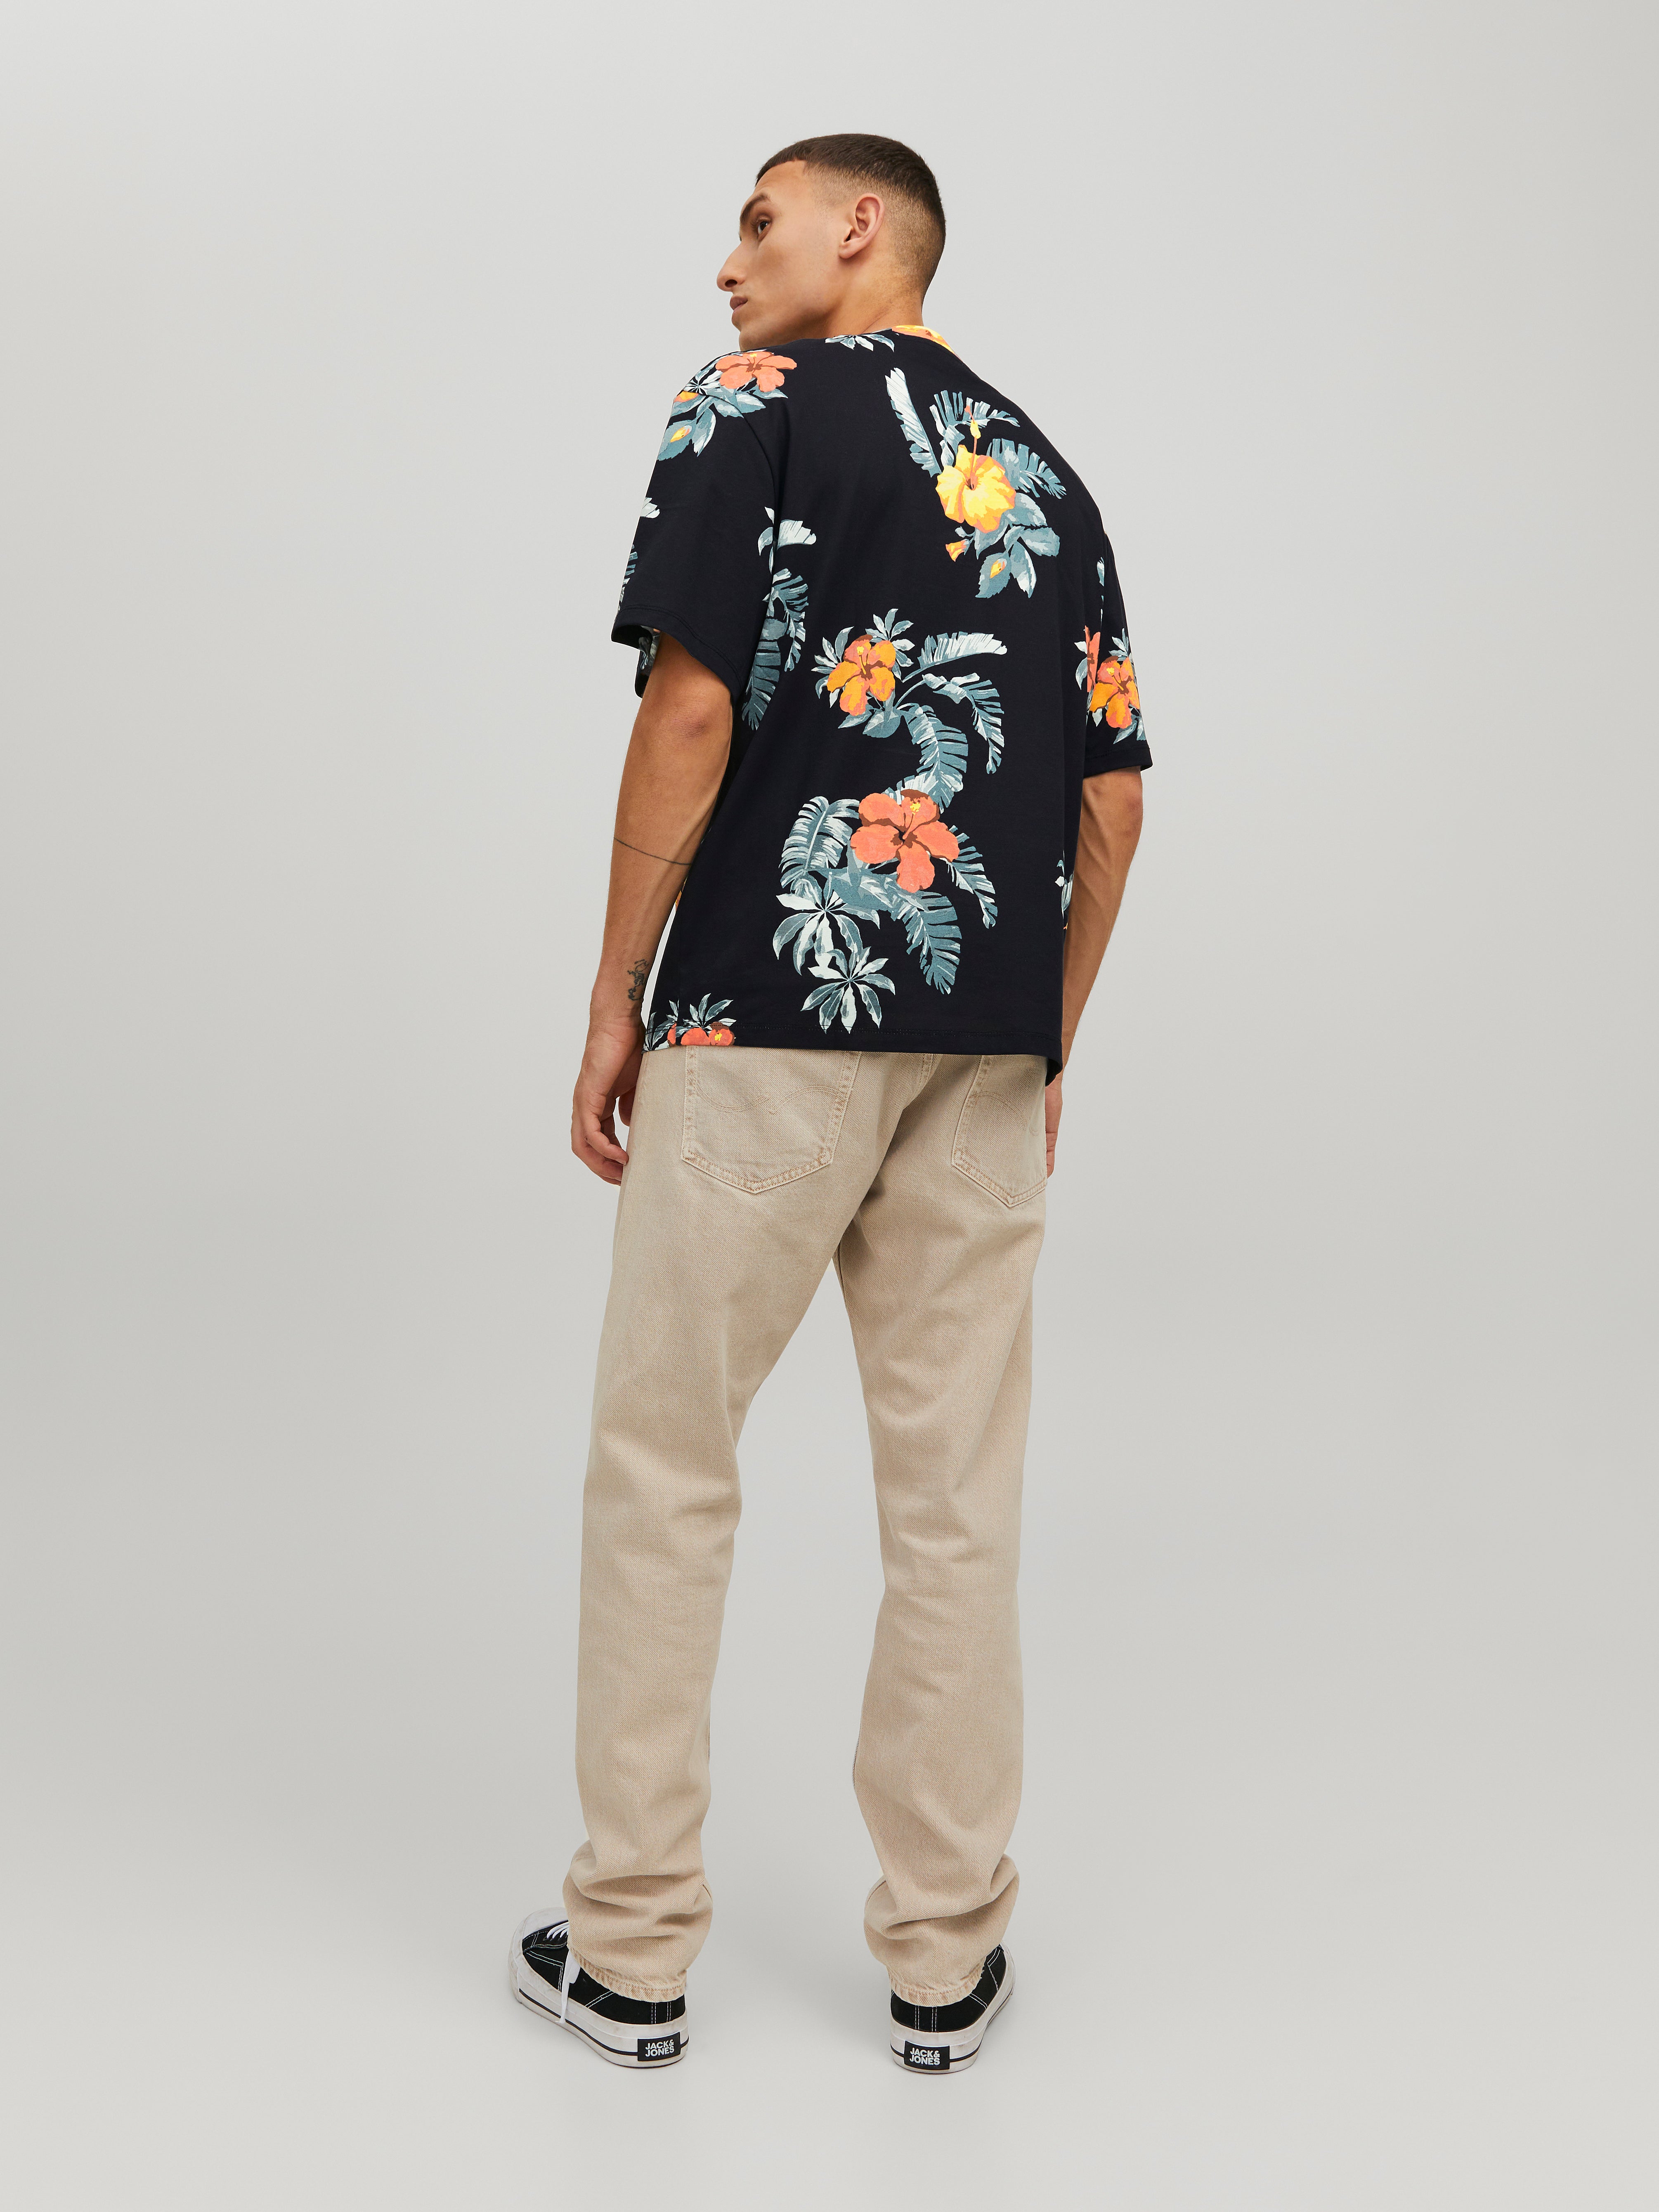 Floral Crew neck T-shirt with 50% discount! | Jack & Jones®